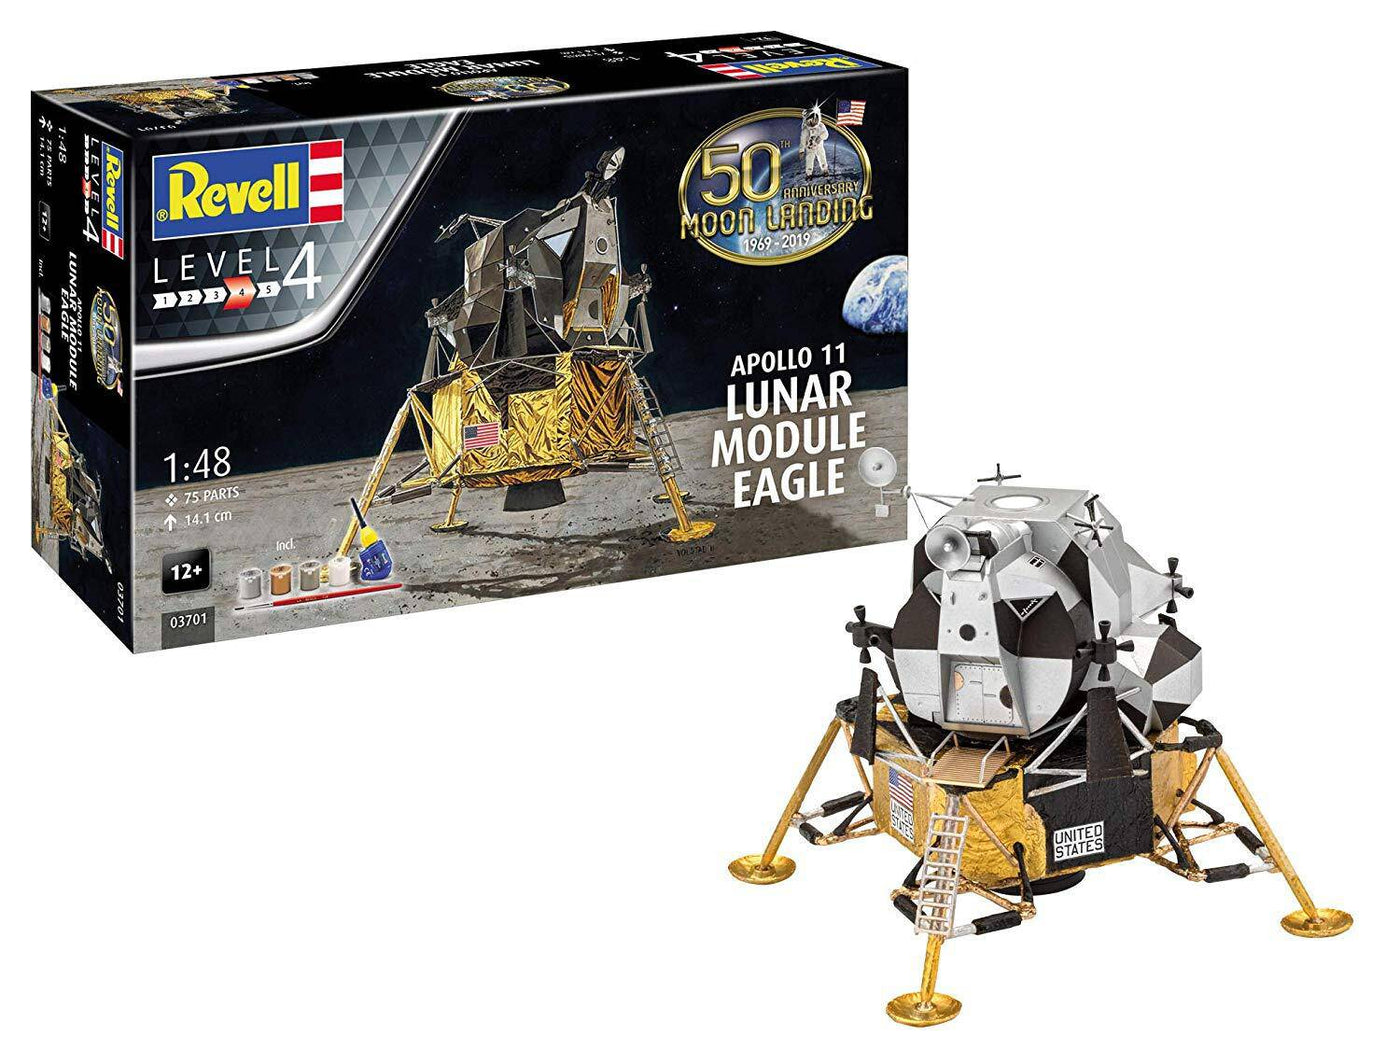 Revell - 1/48 Apollo 11 Lunar Module "Eagle" (50th Anniversary Moon Landing)